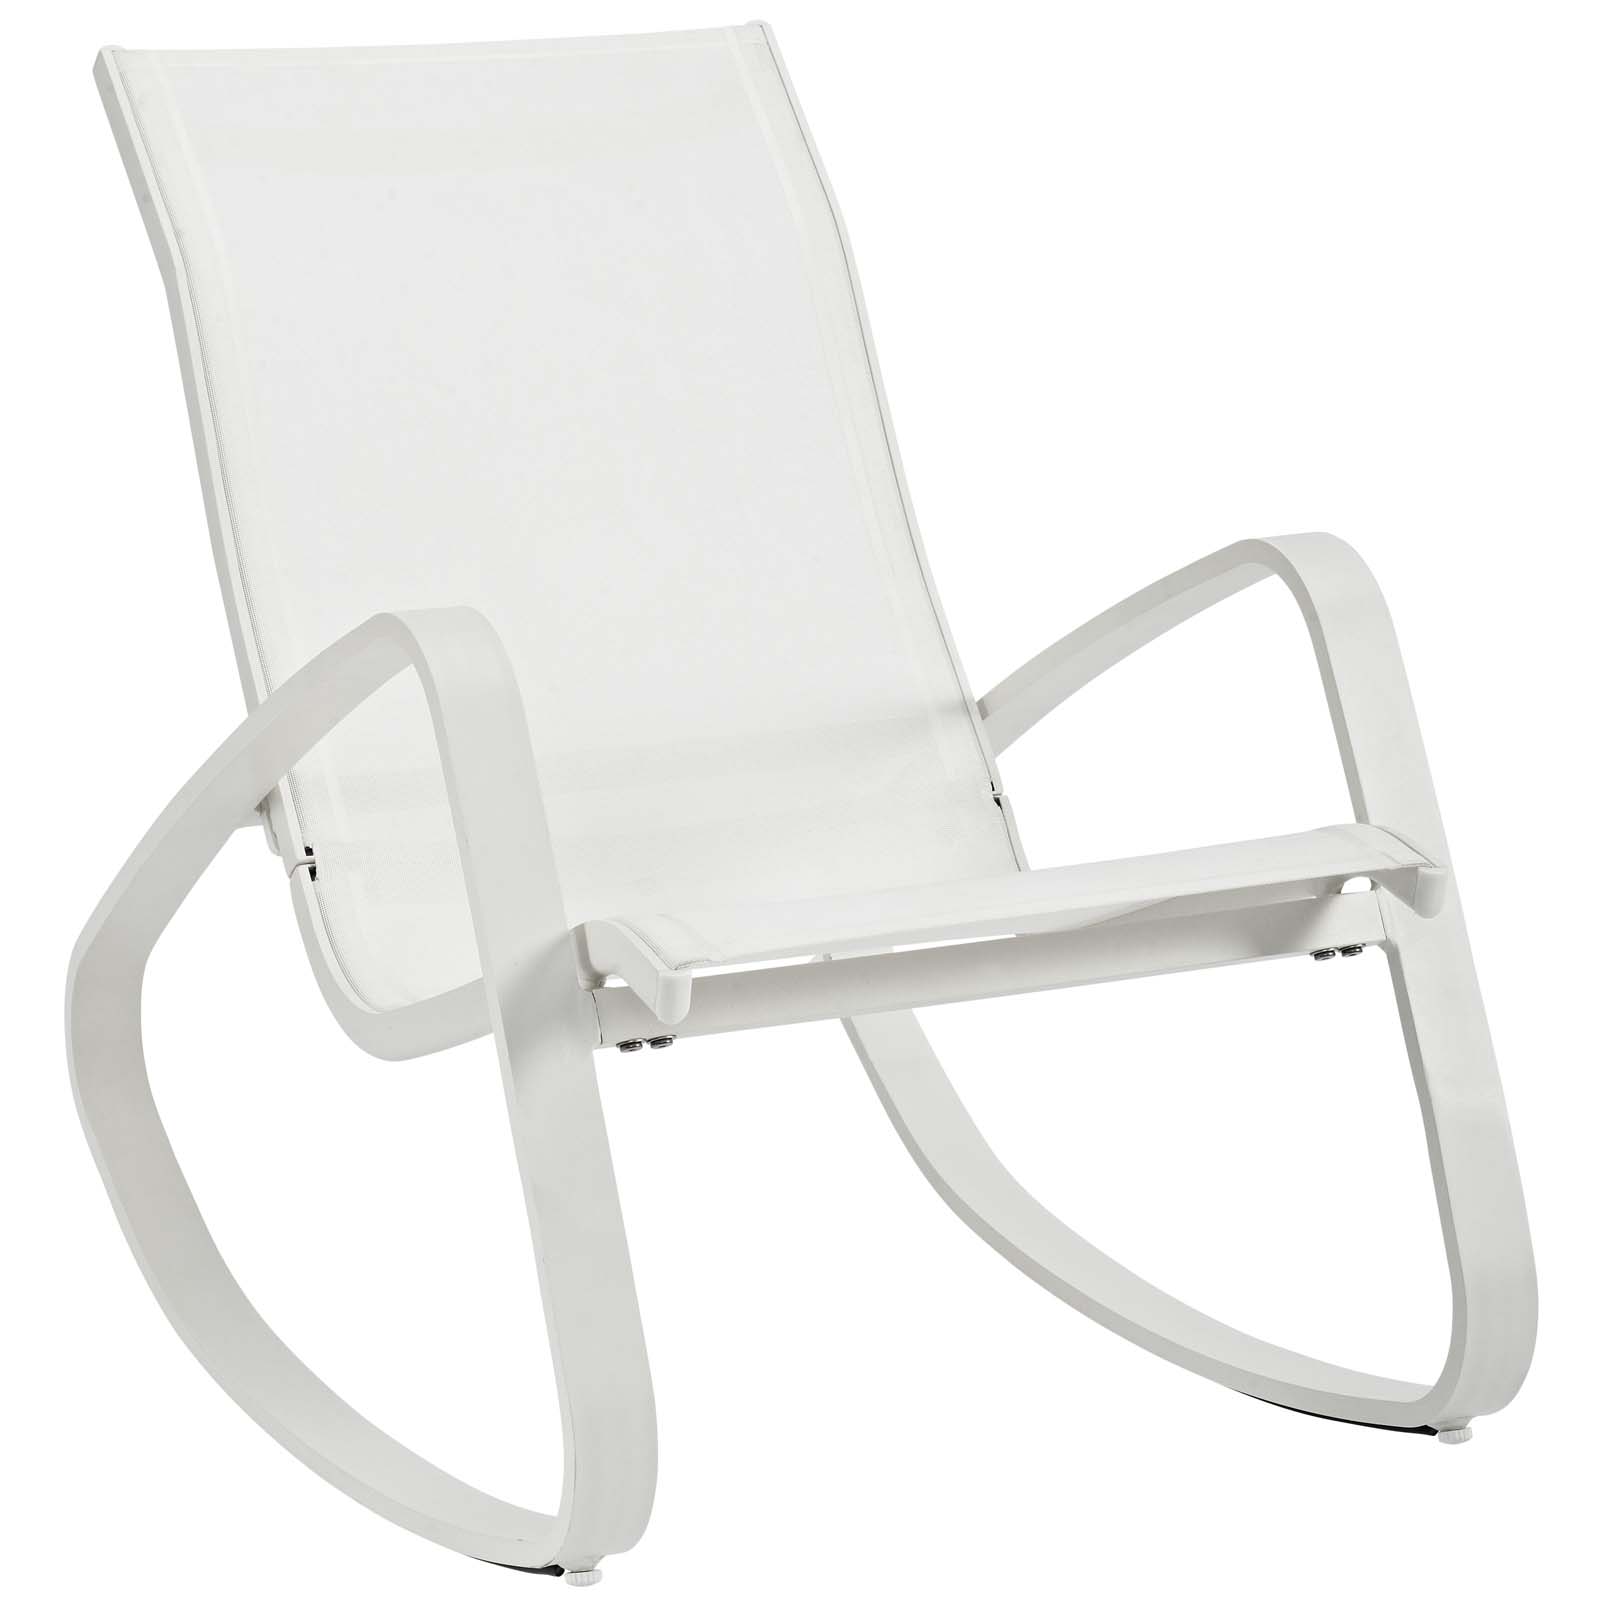 Modern Contemporary Urban Design Outdoor Patio Balcony Garden Furniture Locking Lounge Chair Armchair, Aluminum Metal Steel, White - image 1 of 6